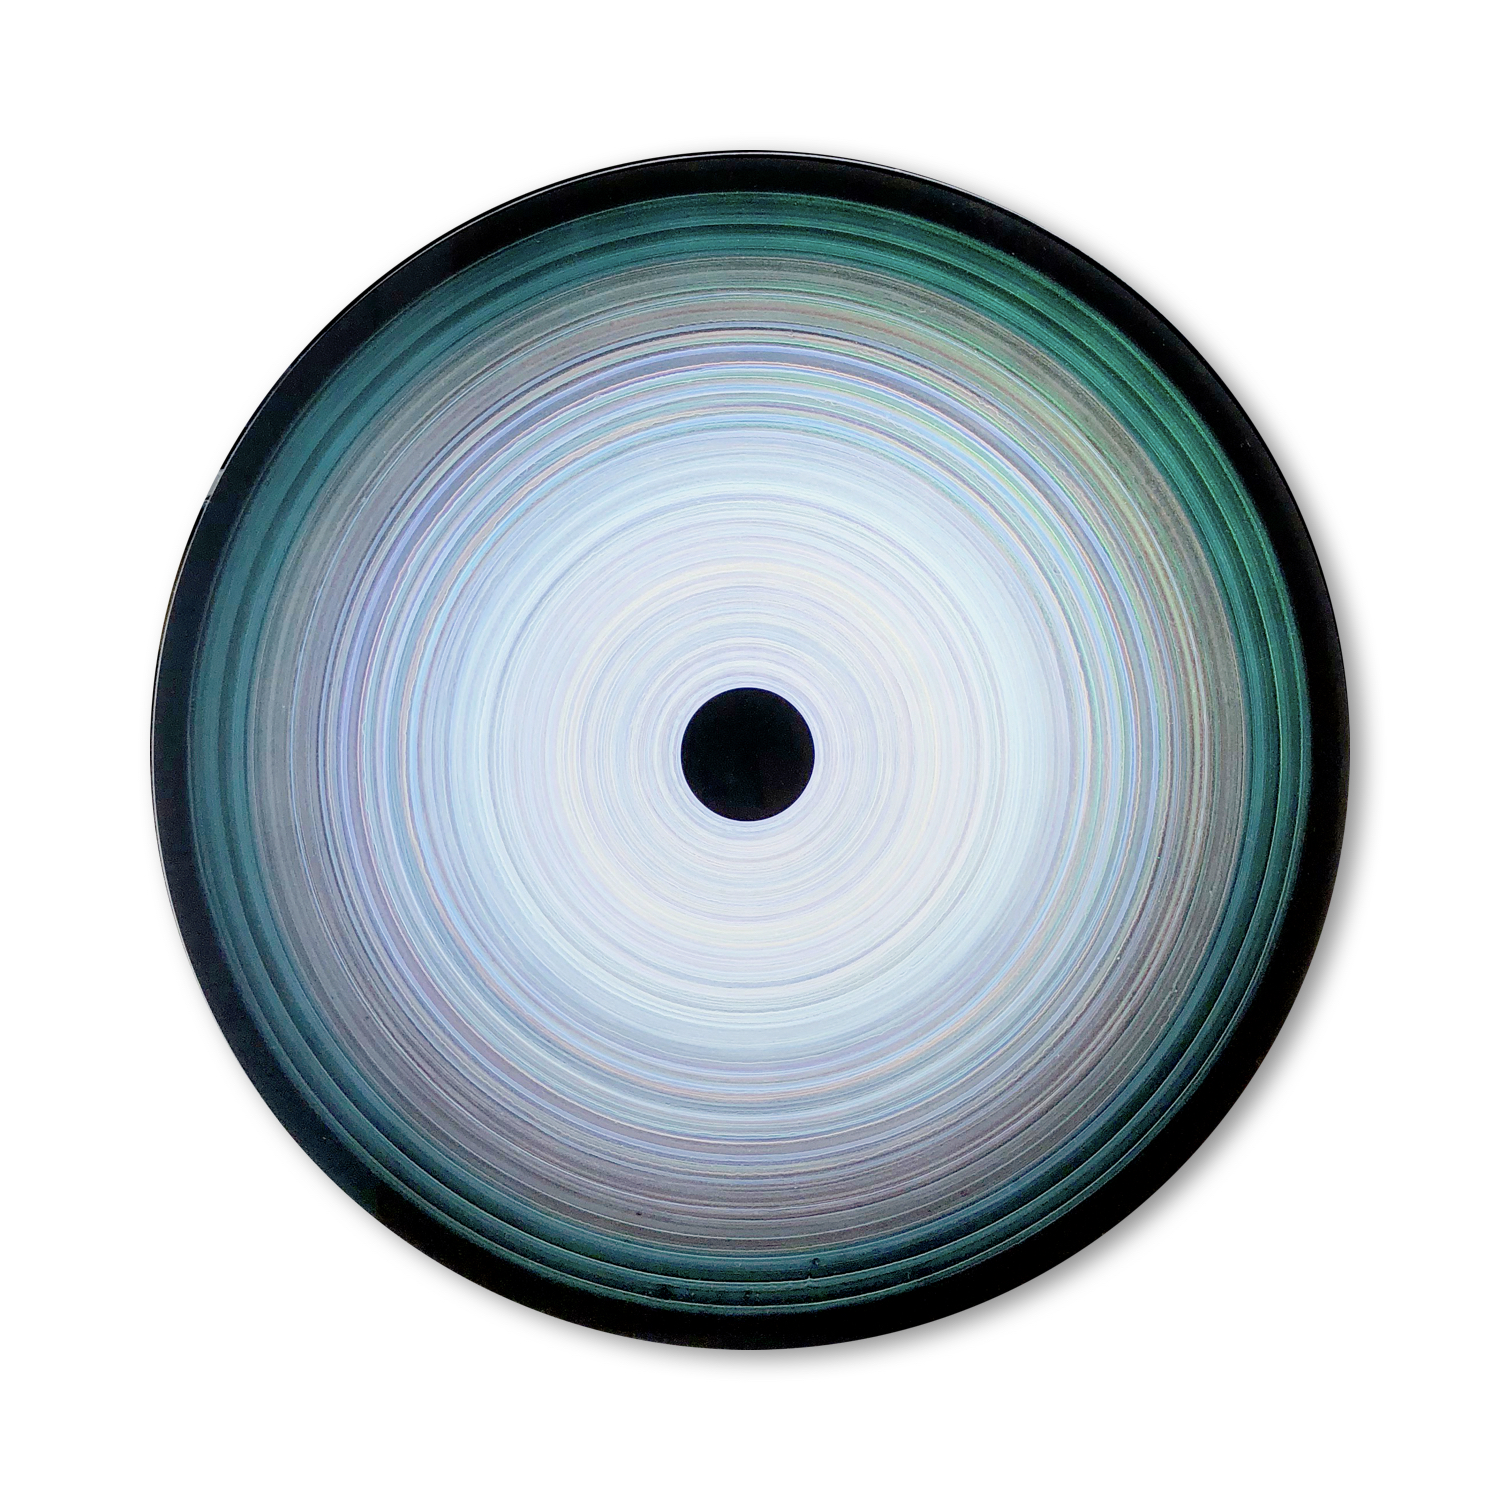 Christopher Martin Gallery—aria Noir 19 32 Disc